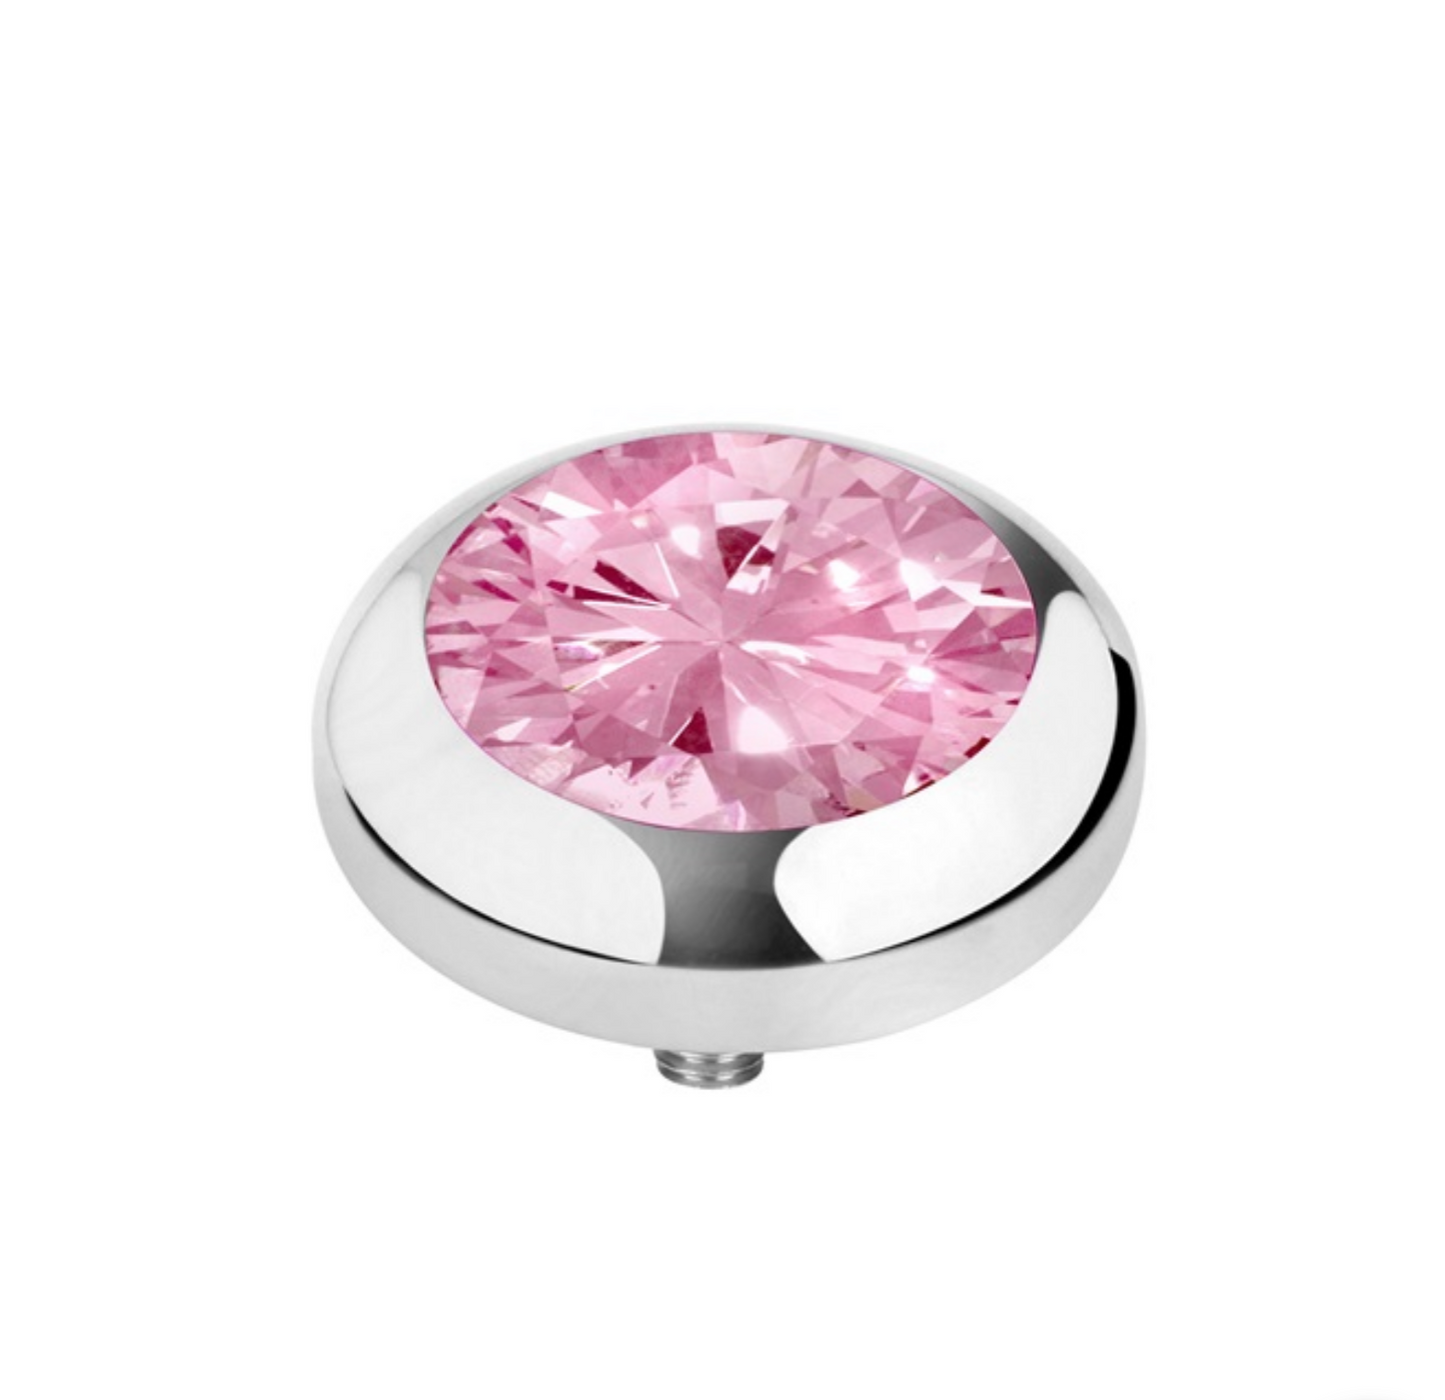 MelanO Vivid CZ Blossom pink 7mm  - silver or Rose gold